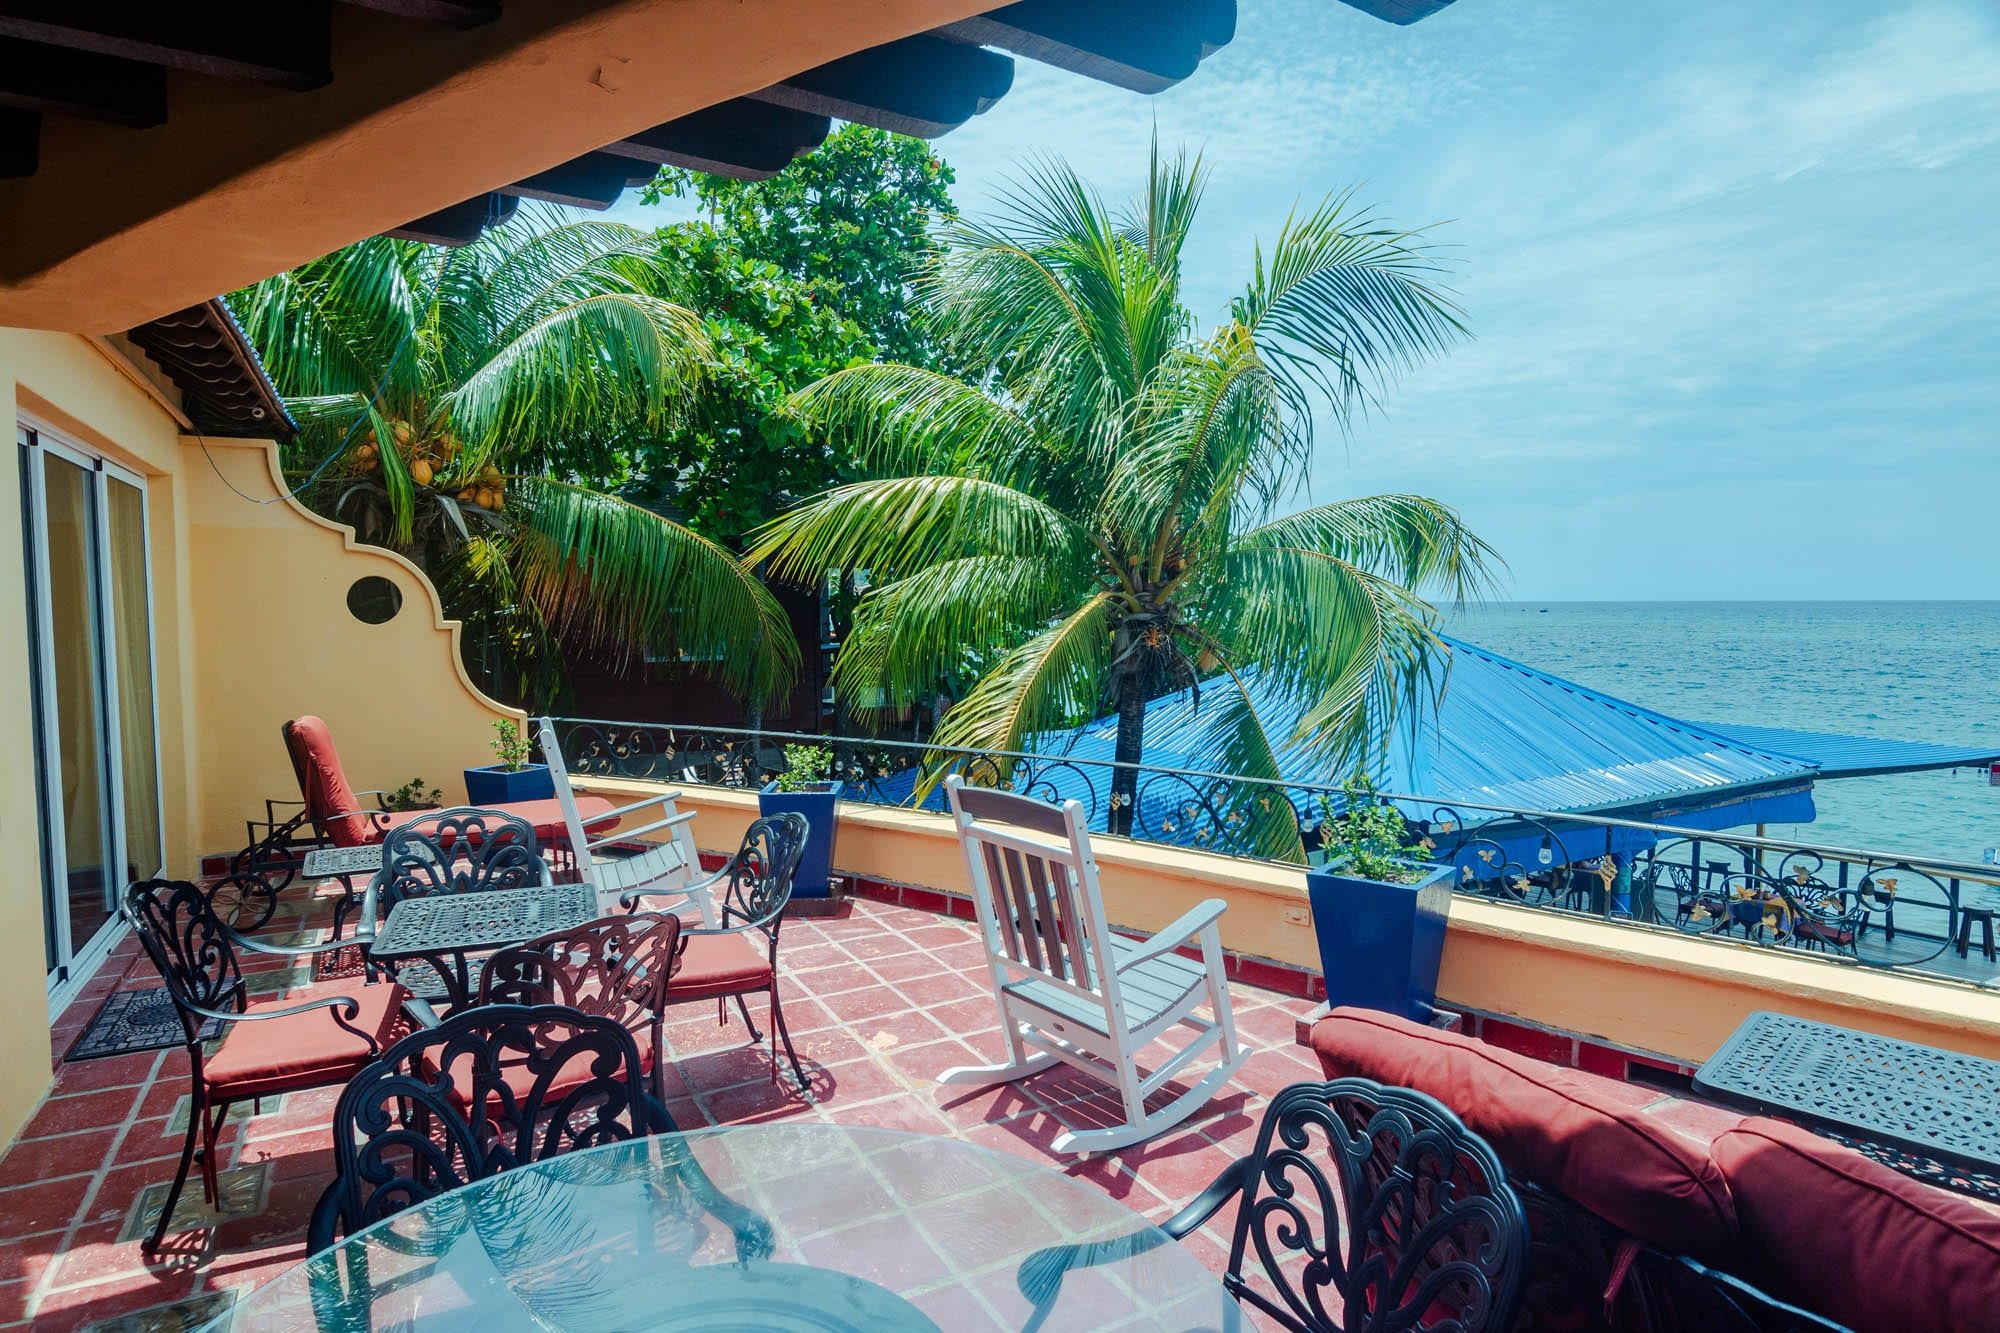 Theme Rooms at Hacienda Caribe Toreso -25-min.jpg